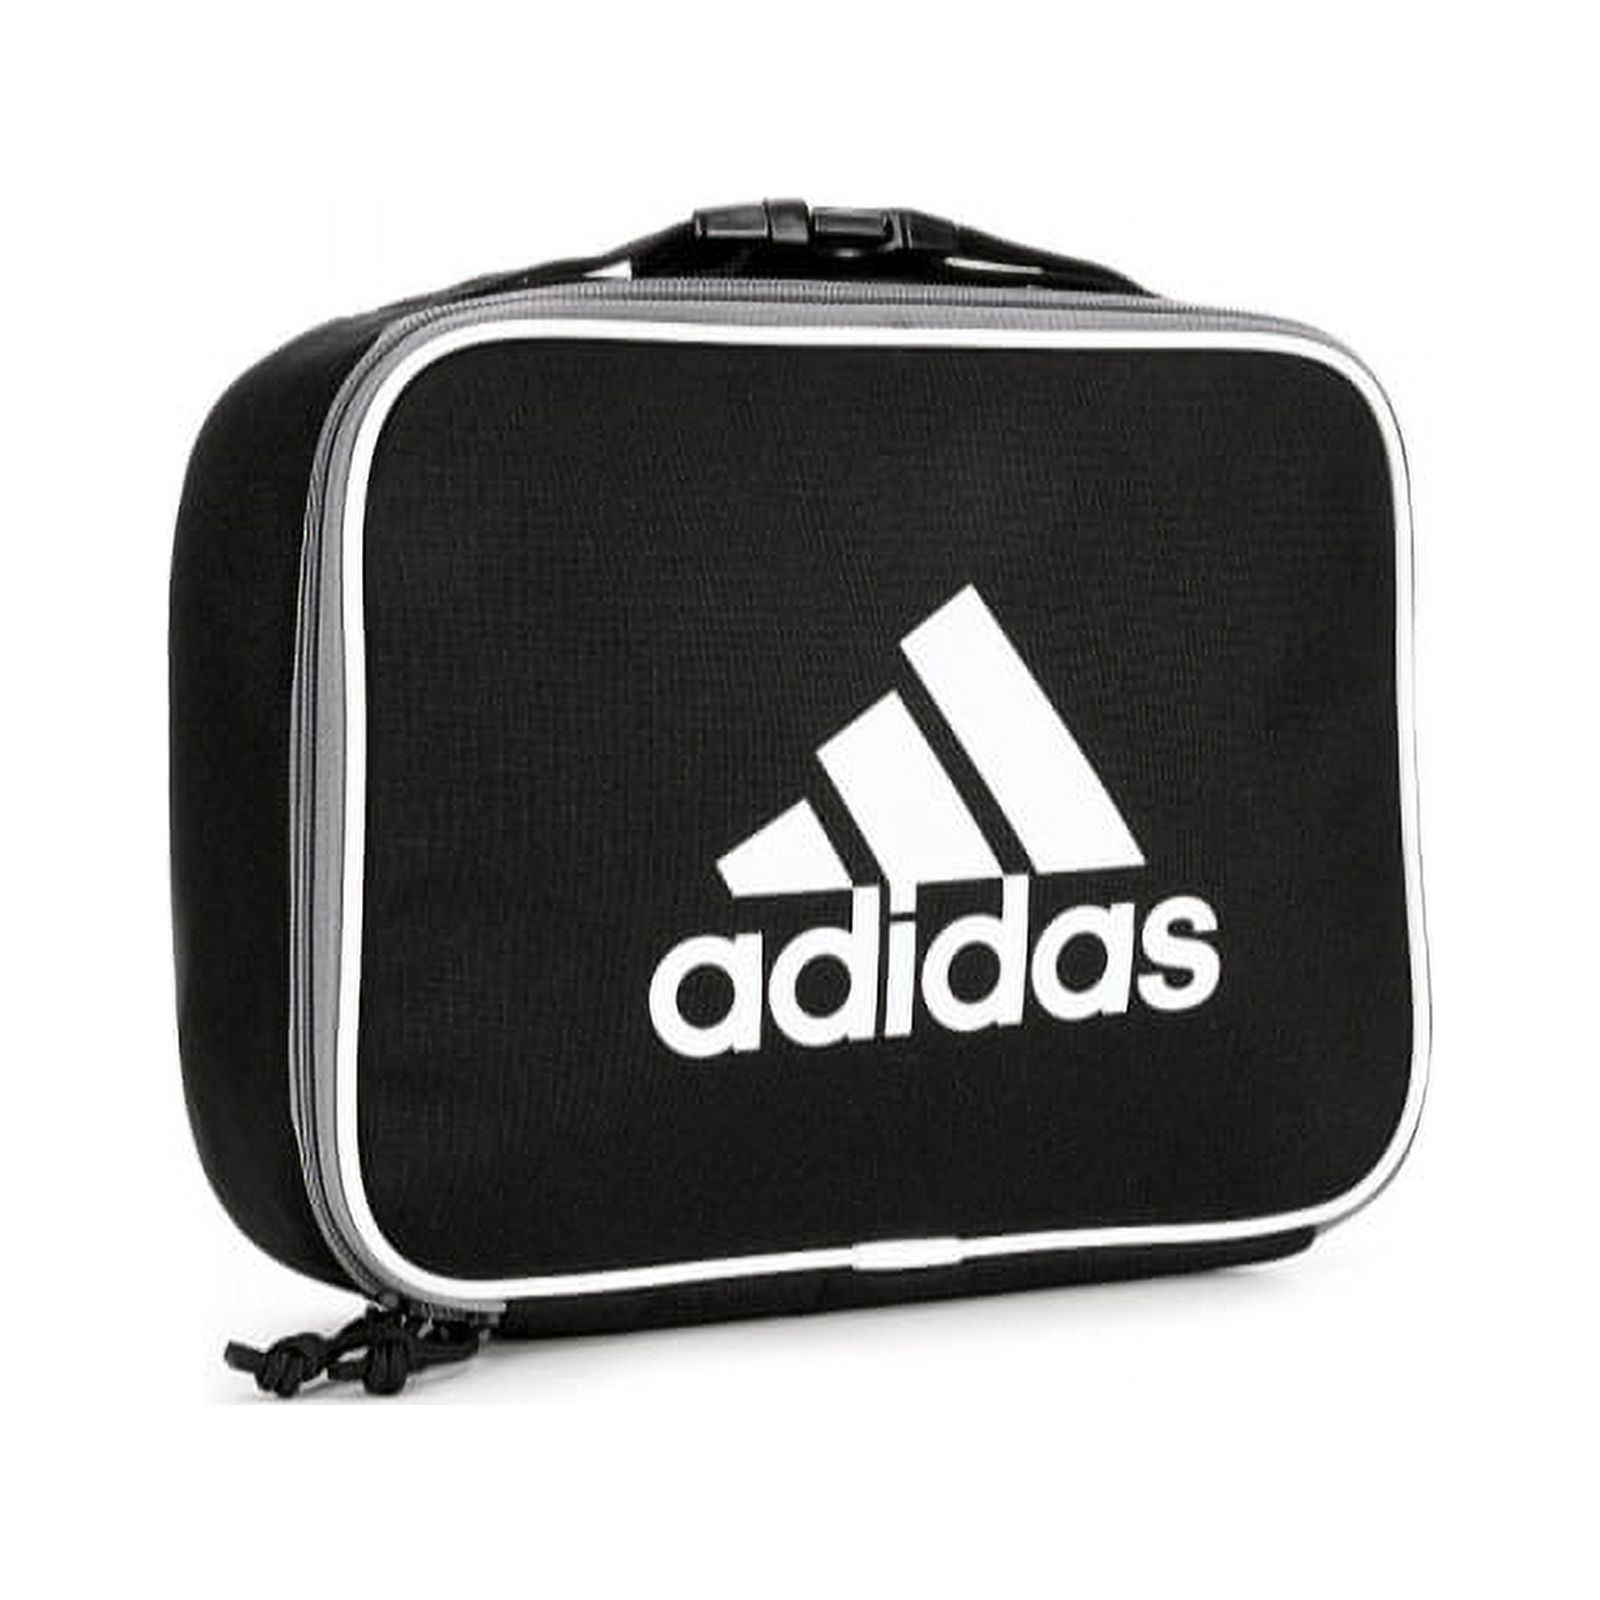 adidas Foundation Lunch Bag, Black/White, One Size - image 5 of 5